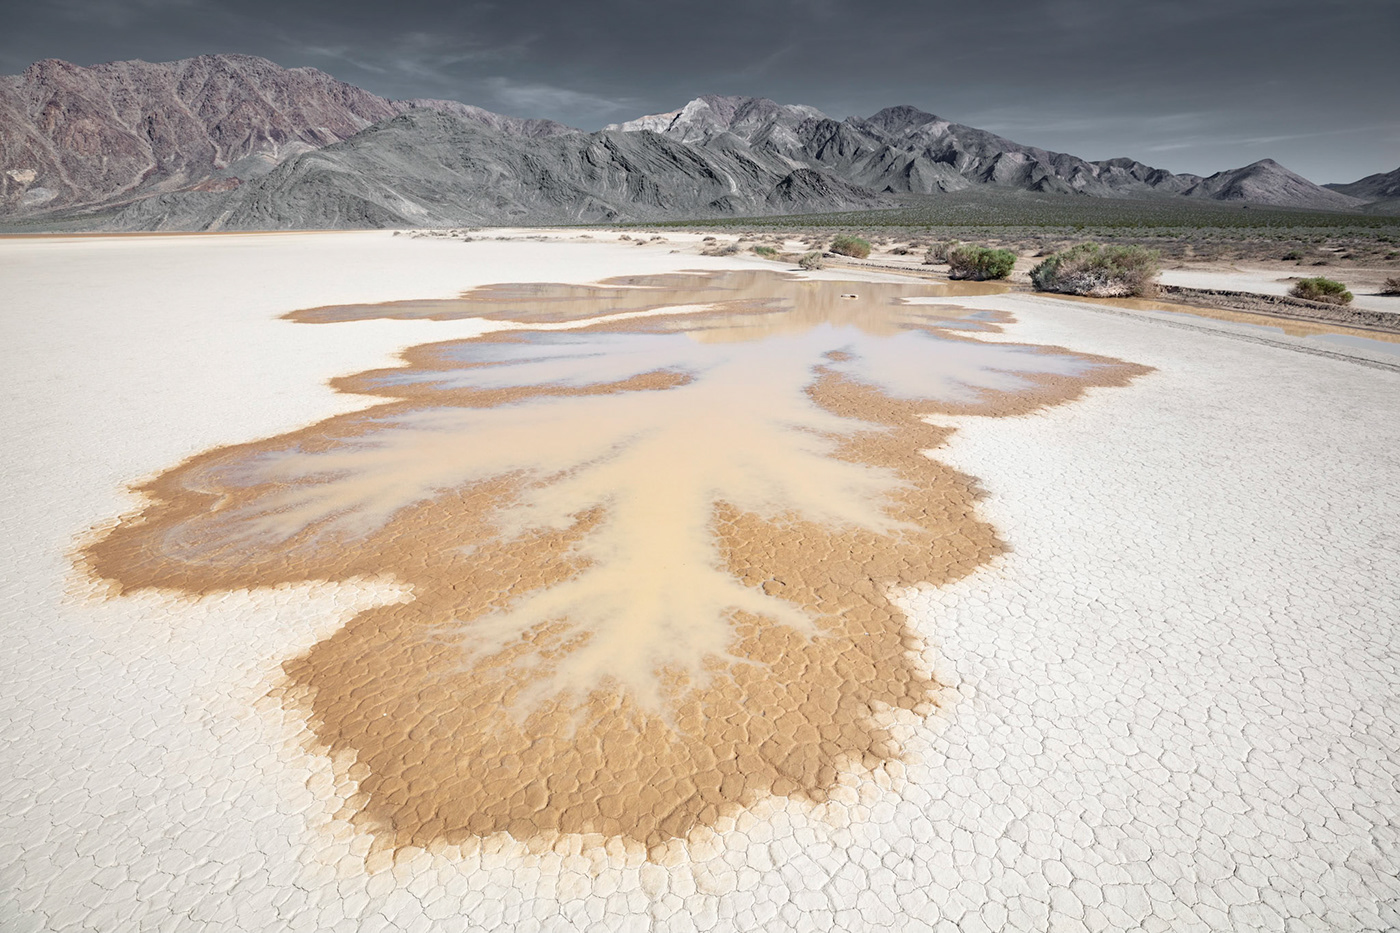 artists palette badwater basin Death Valley Golden Canyon Mesquite Sand Dunes Mosaic Canyon Sidewinder Snake Twenty Mule Team Ubehebe Crater zabriskie point